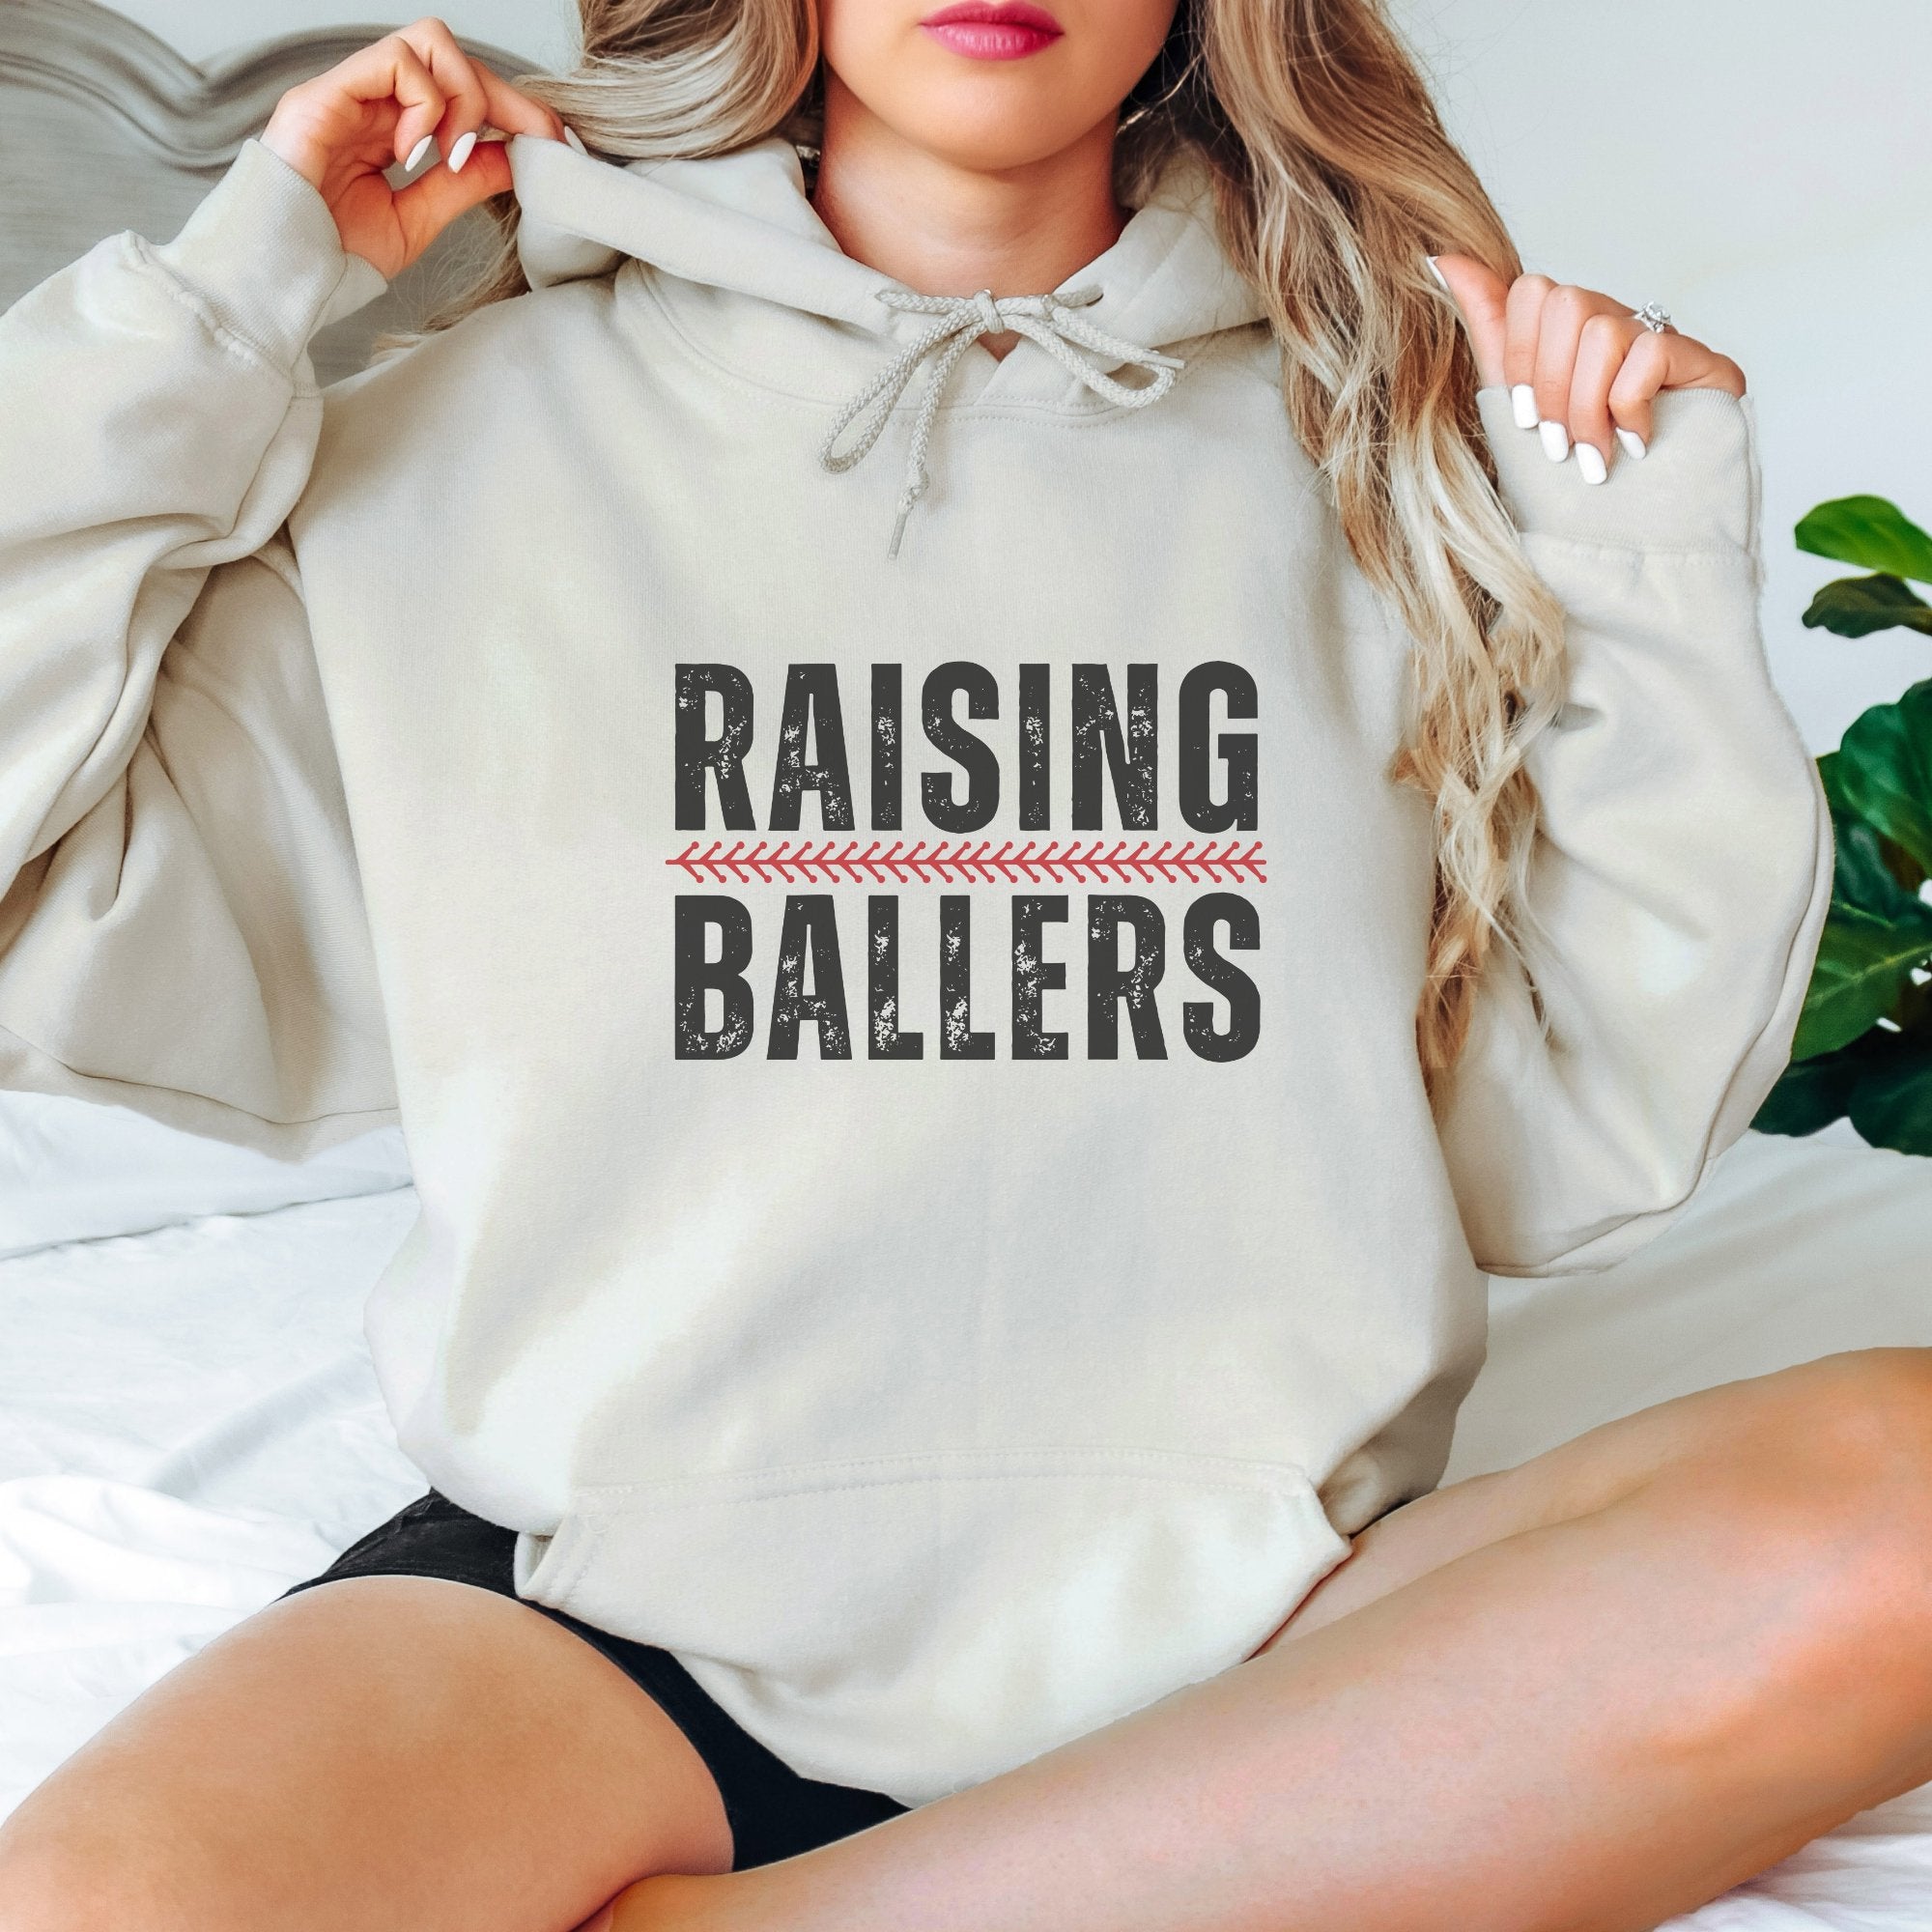 Raising Ballers Hoodie - Trendznmore